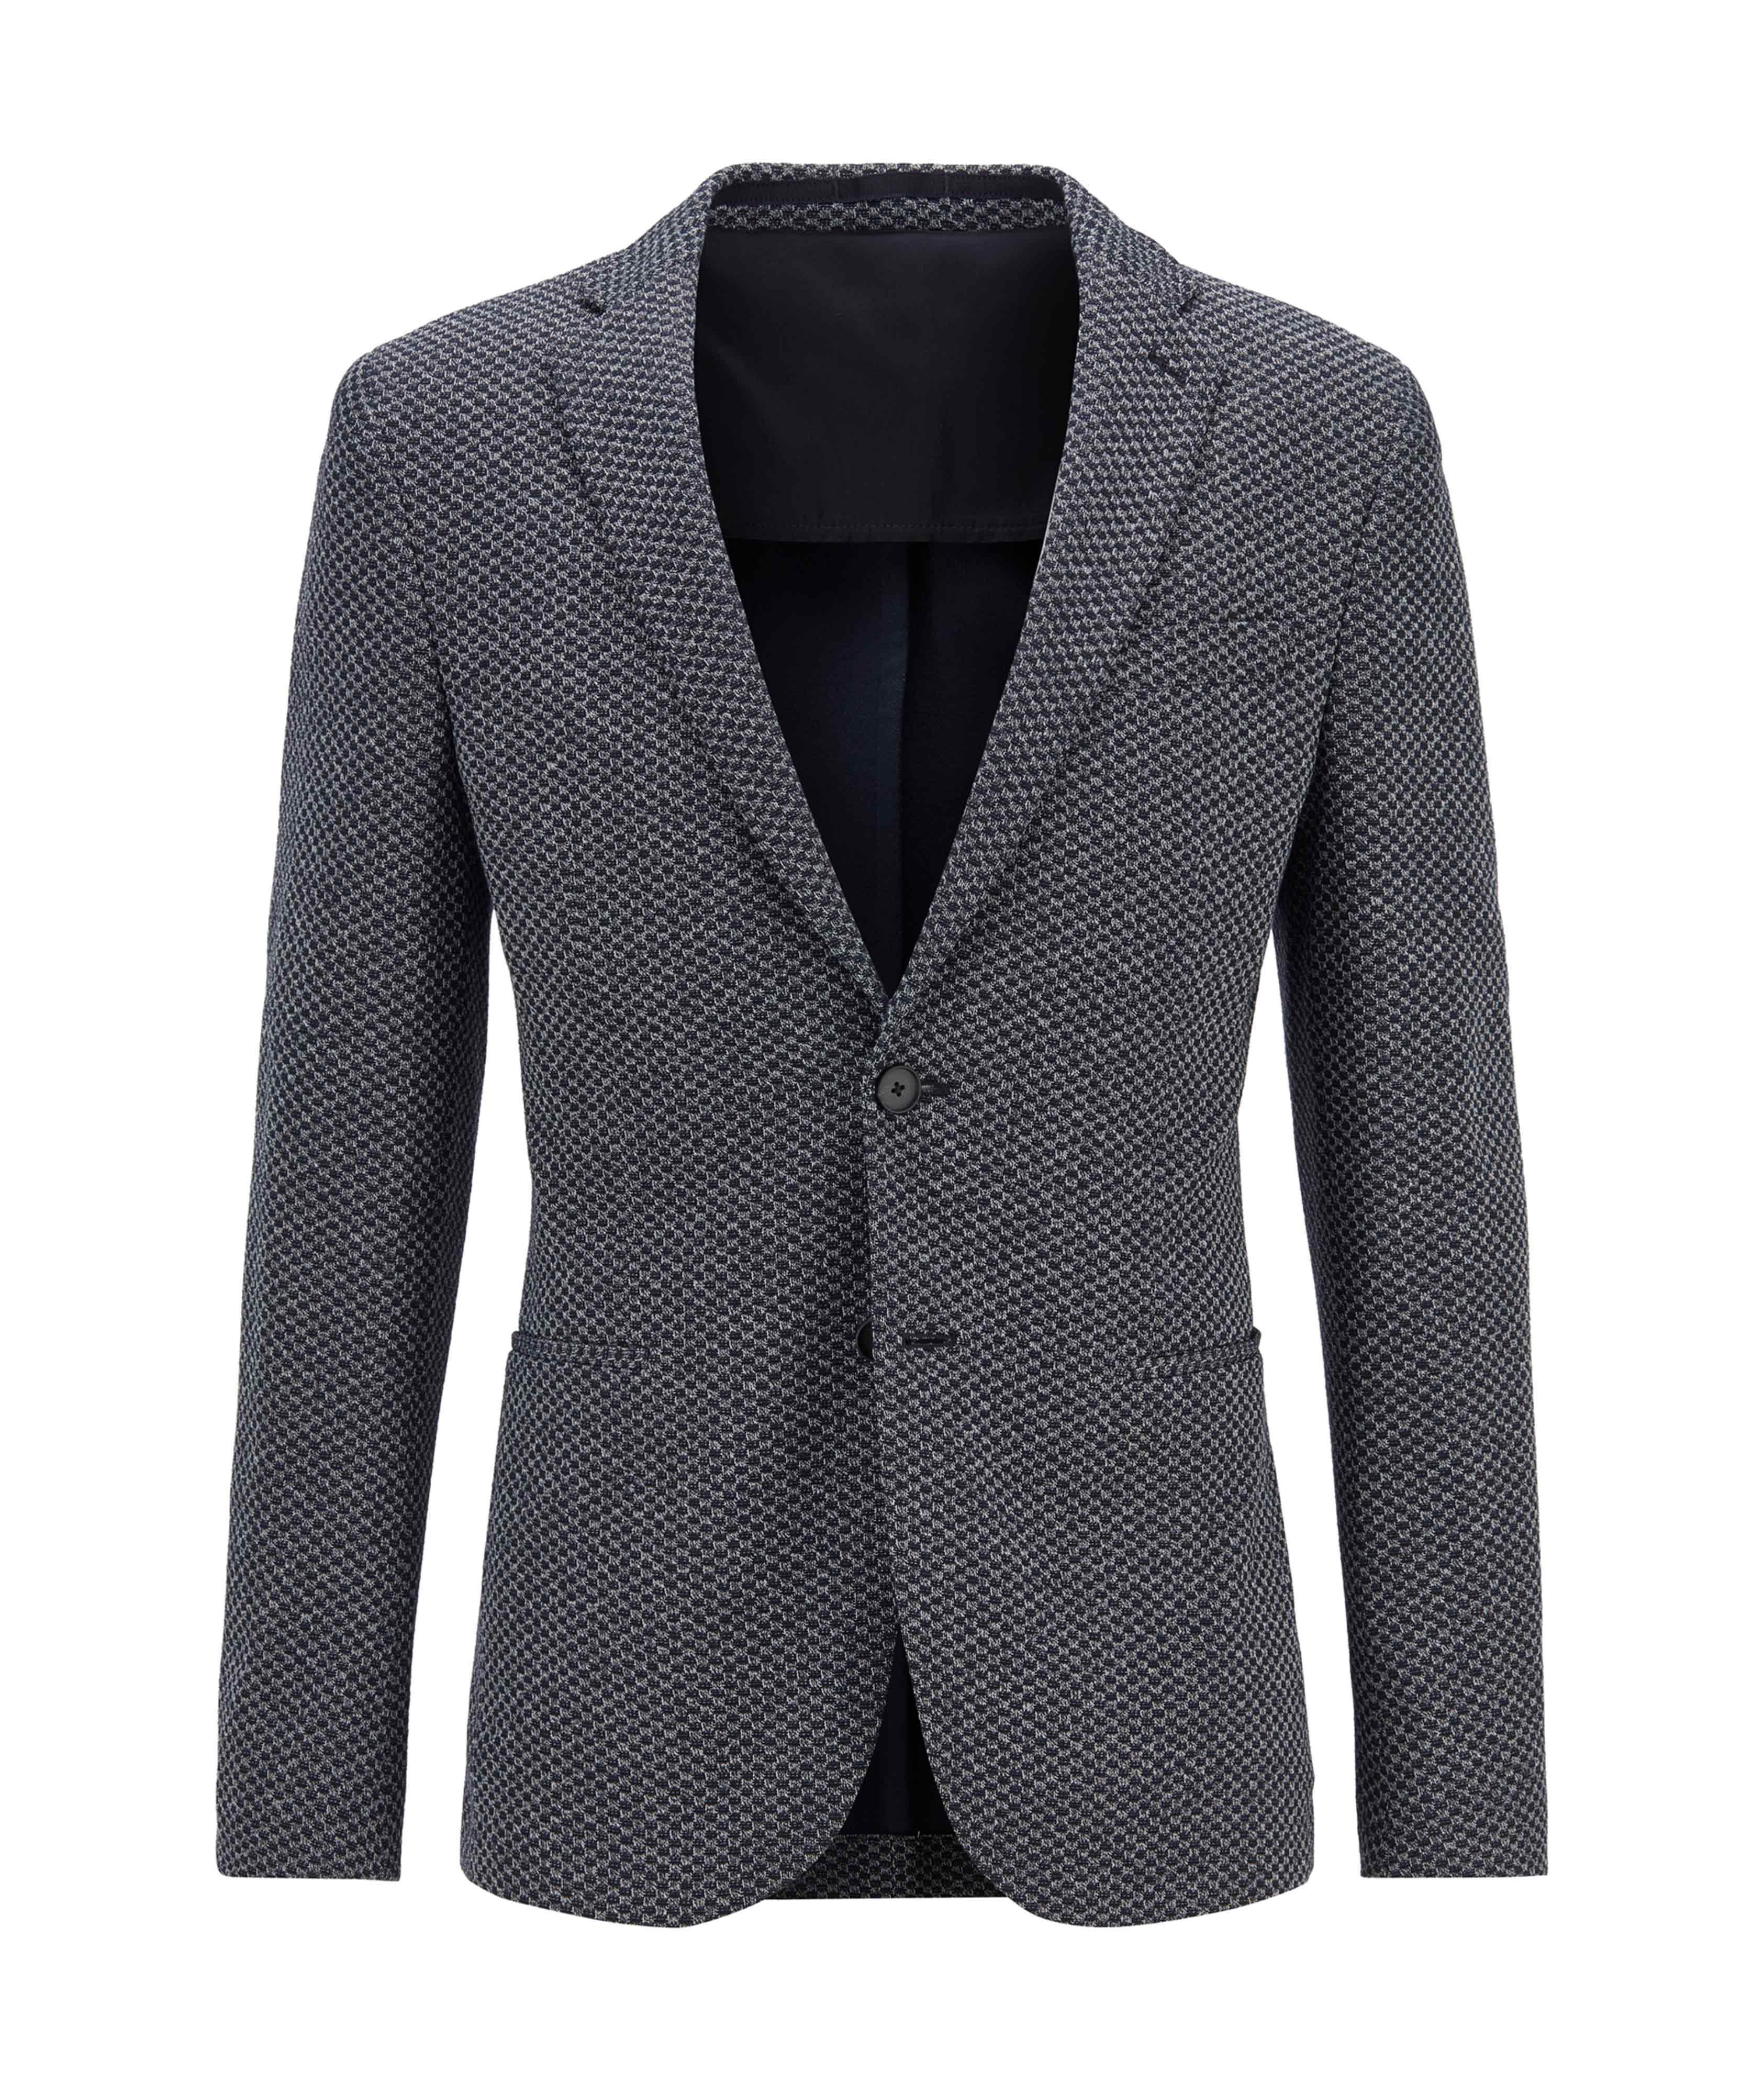 Norwin4 Checkered Cotton-Blend Sports Jacket image 0